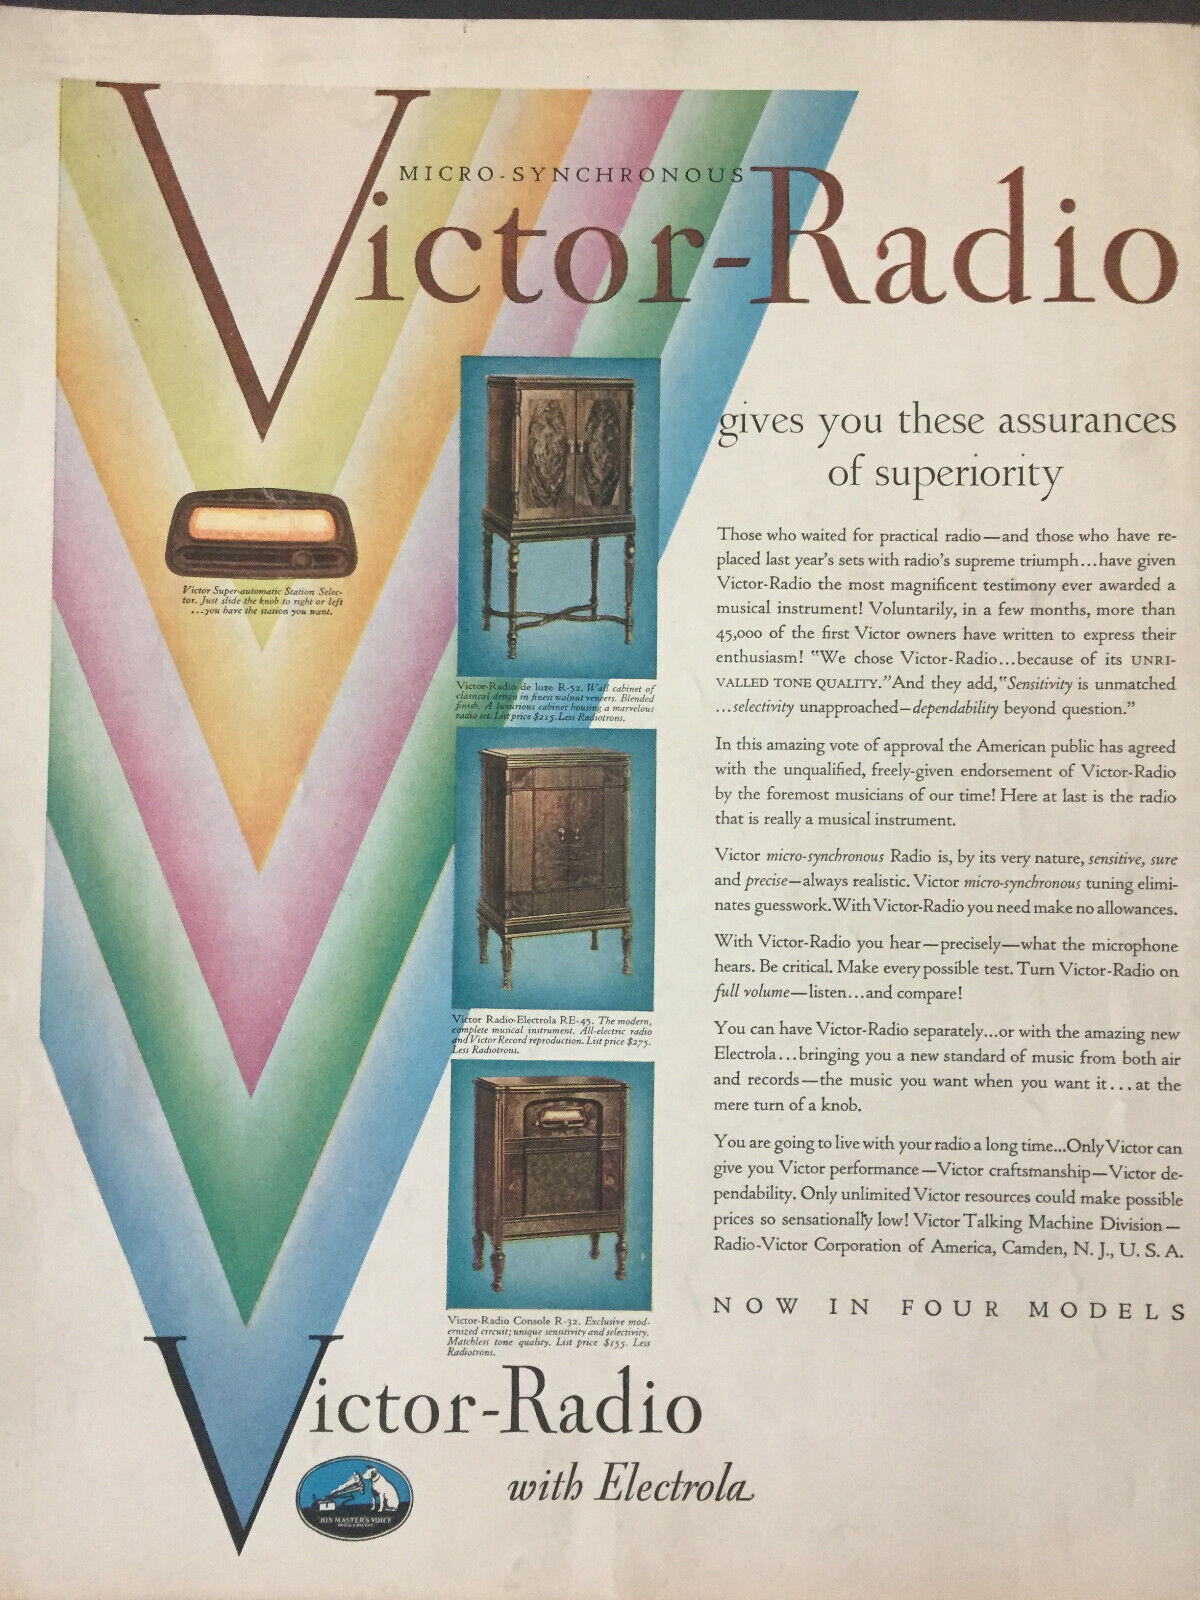 1930 Victor Radio with Electrola 3 Models Shown Vintage Advertisement 